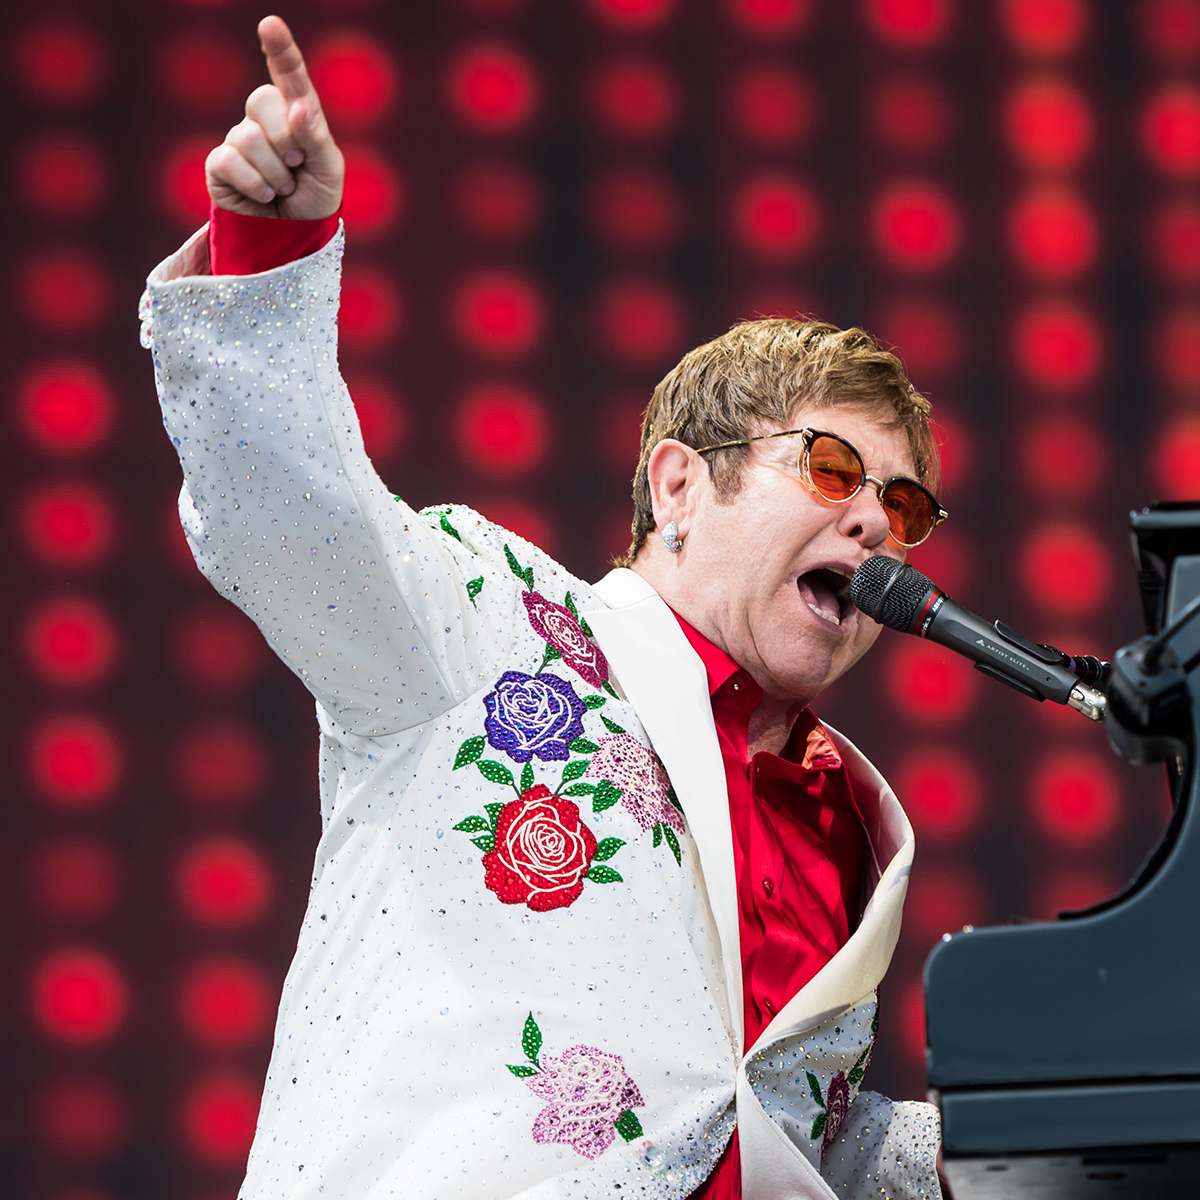 Elton John sighting at Dodger Stadium? 🫣 #dodgers #mlb #eltonjohn